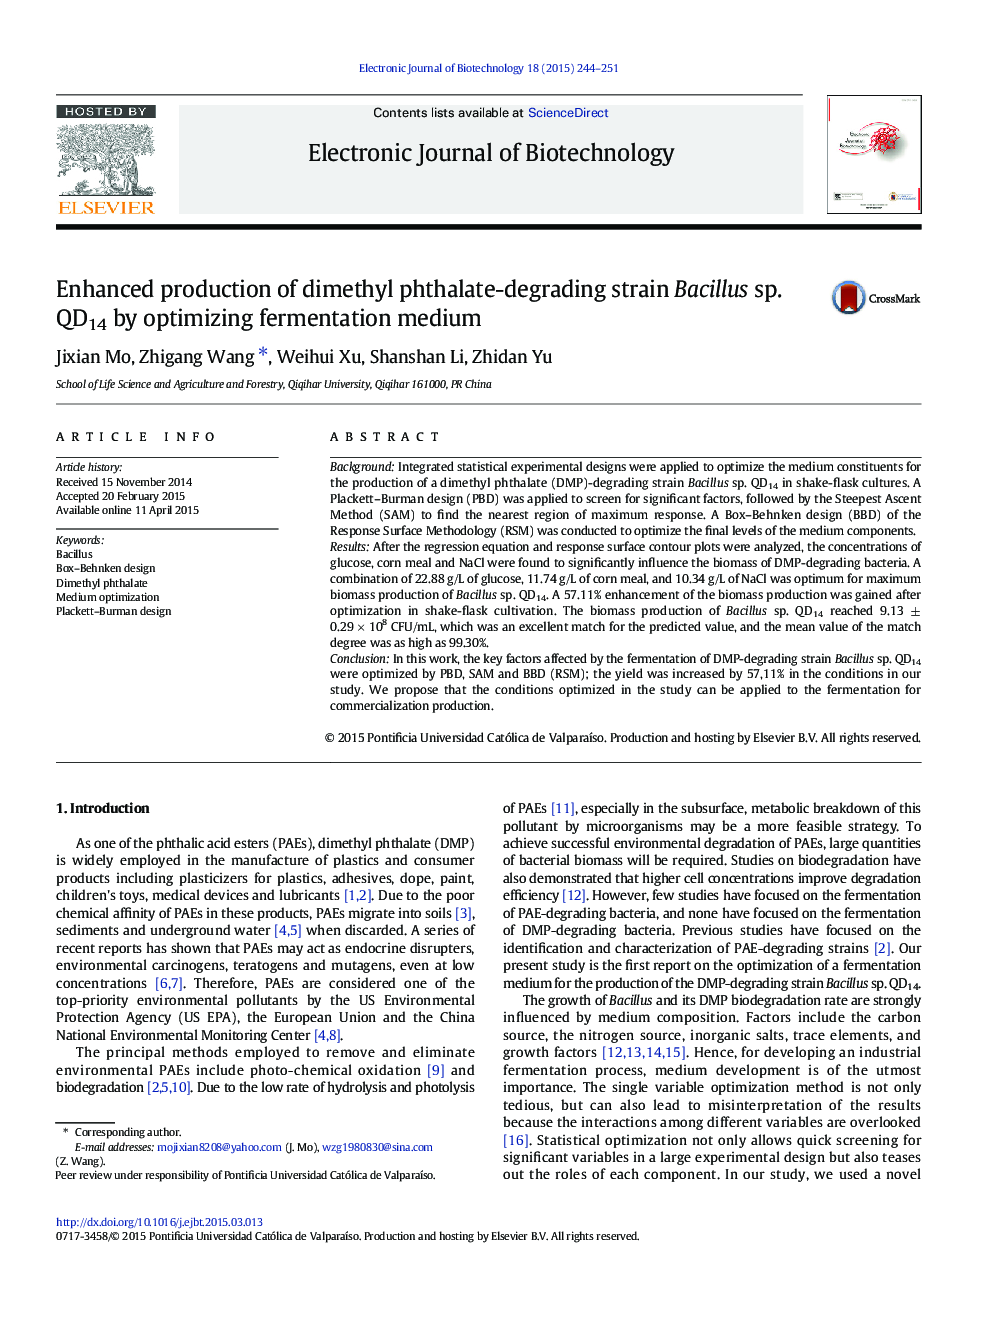 Enhanced production of dimethyl phthalate-degrading strain Bacillus sp. QD14 by optimizing fermentation medium 